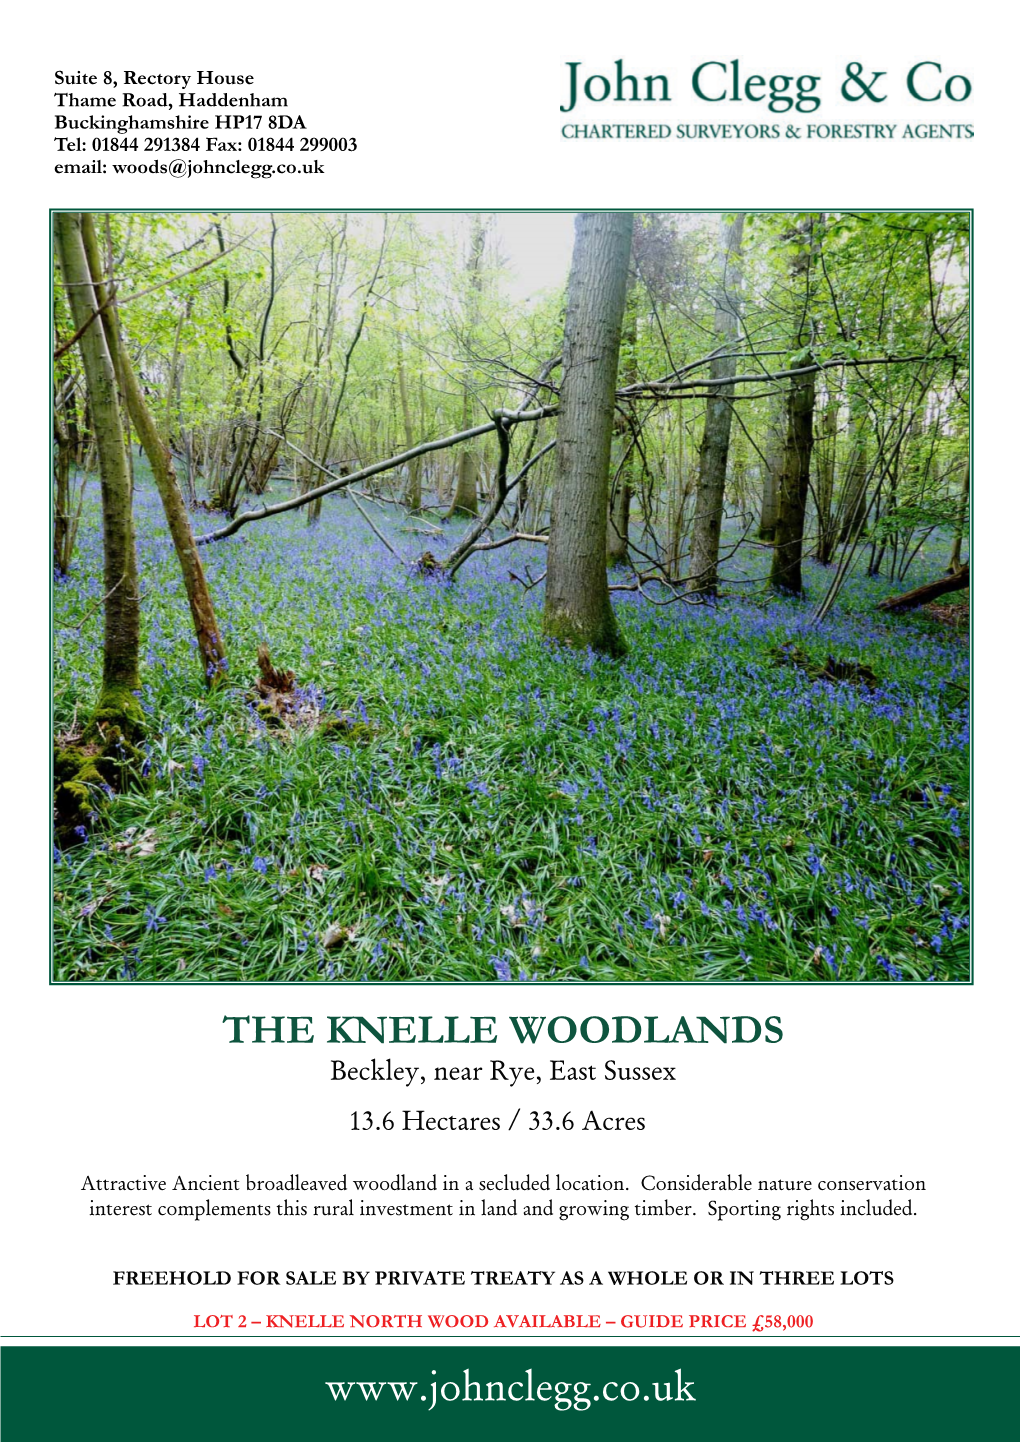 The Knelle Woodlands